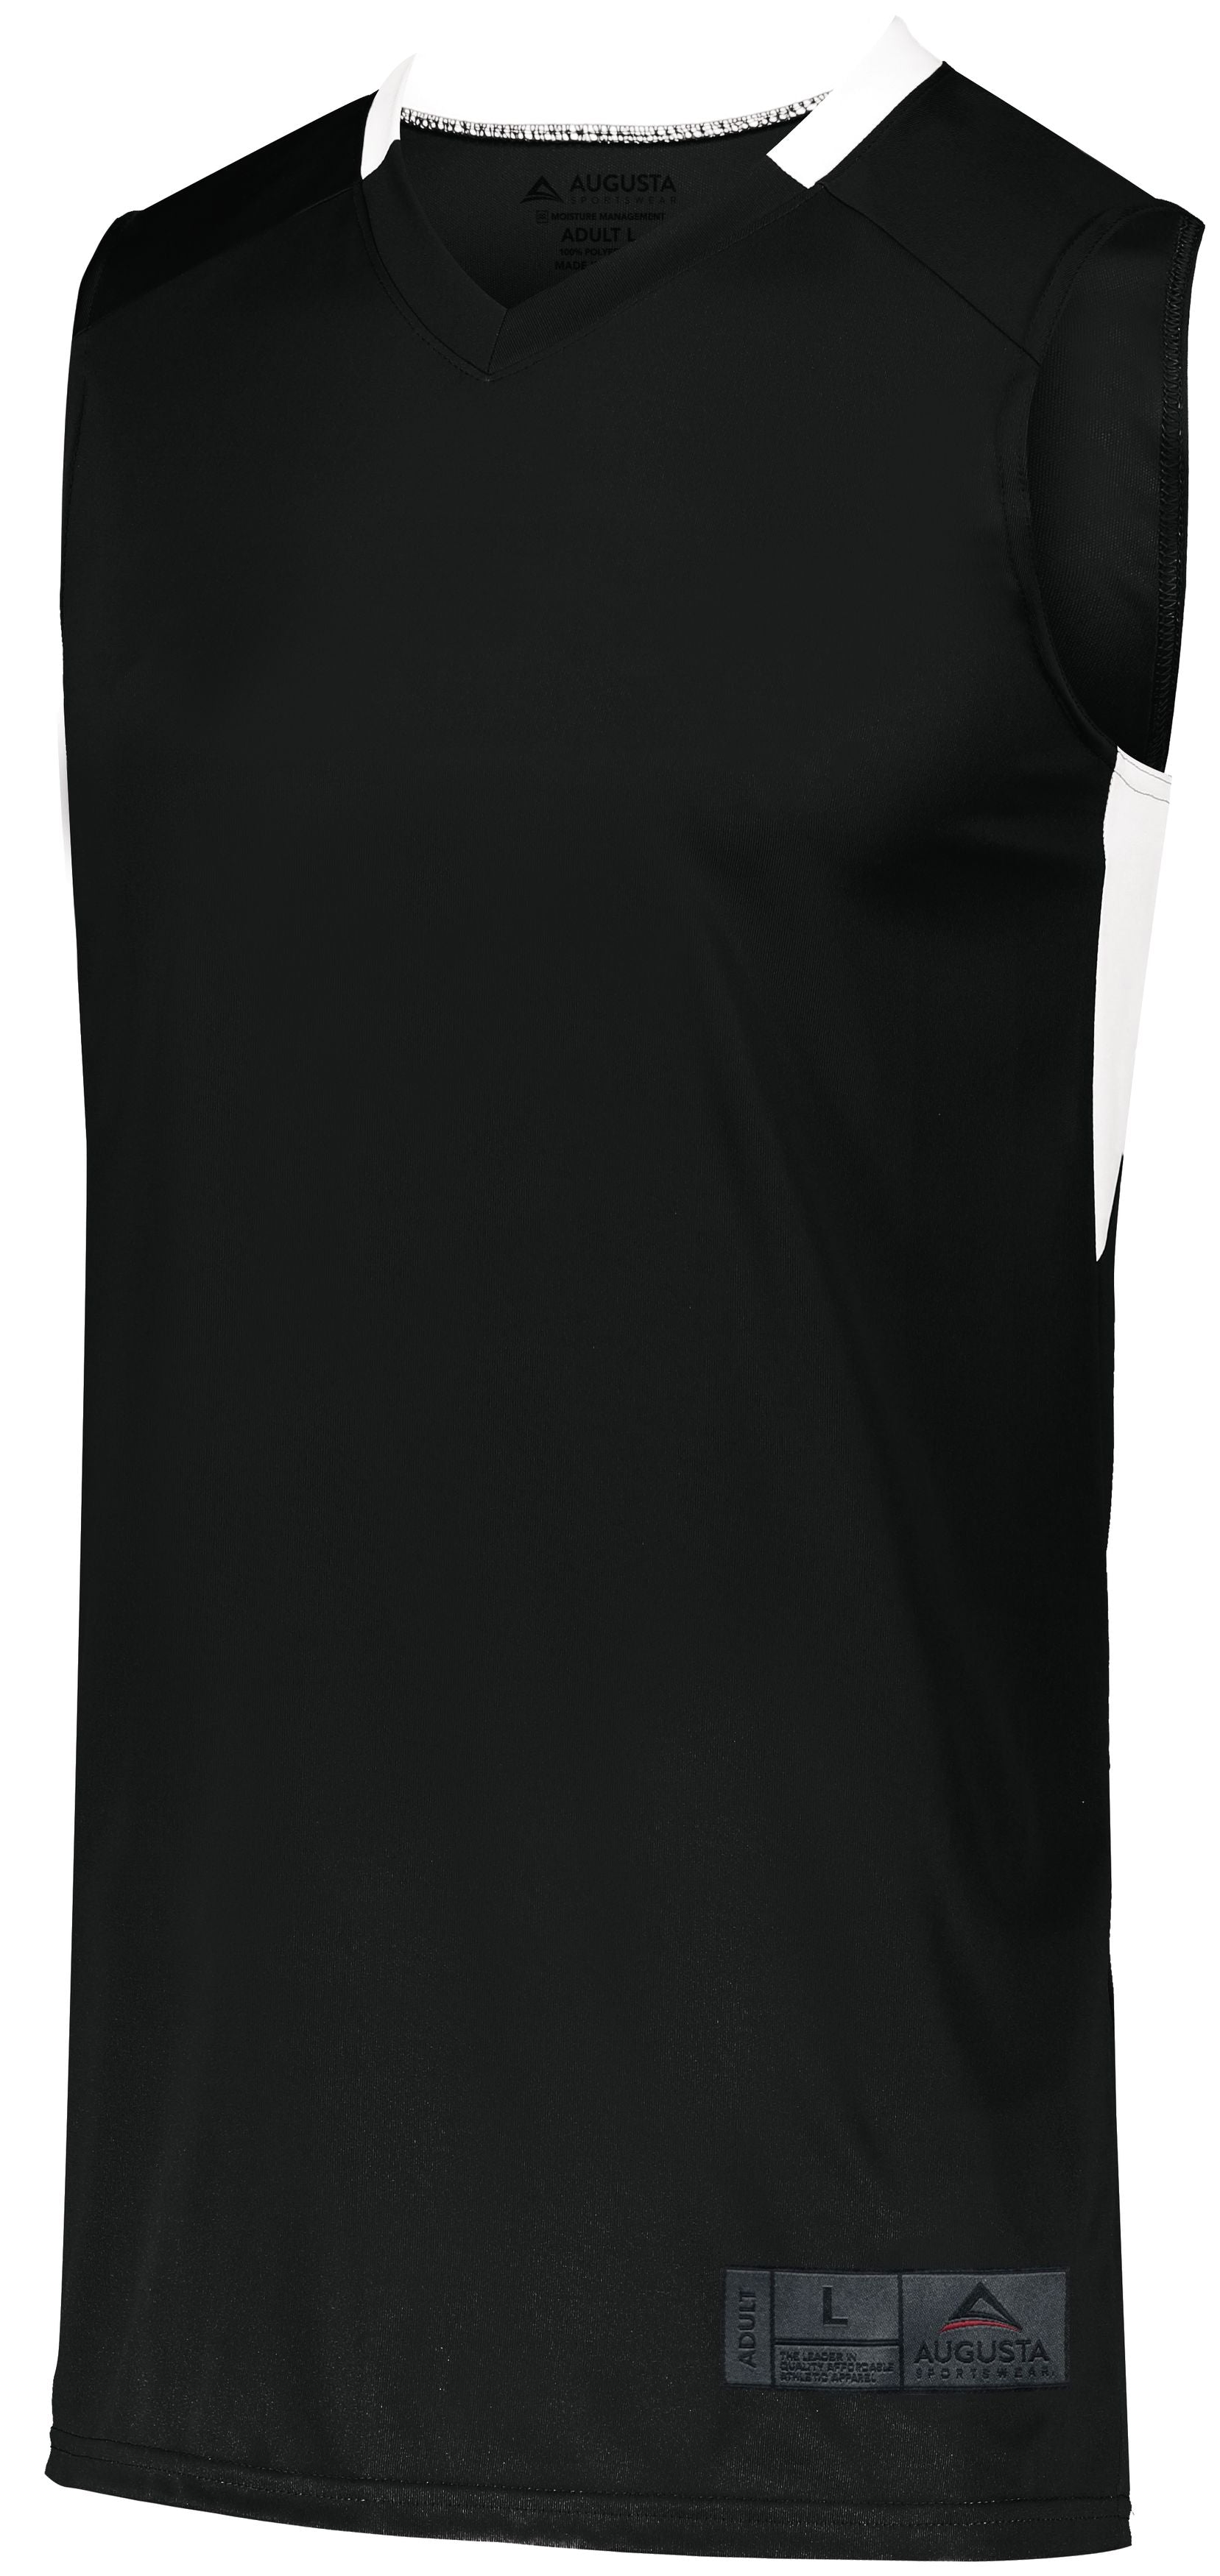 Augusta Sportswear Step-Back Basketball Jersey by Kanaley Creations